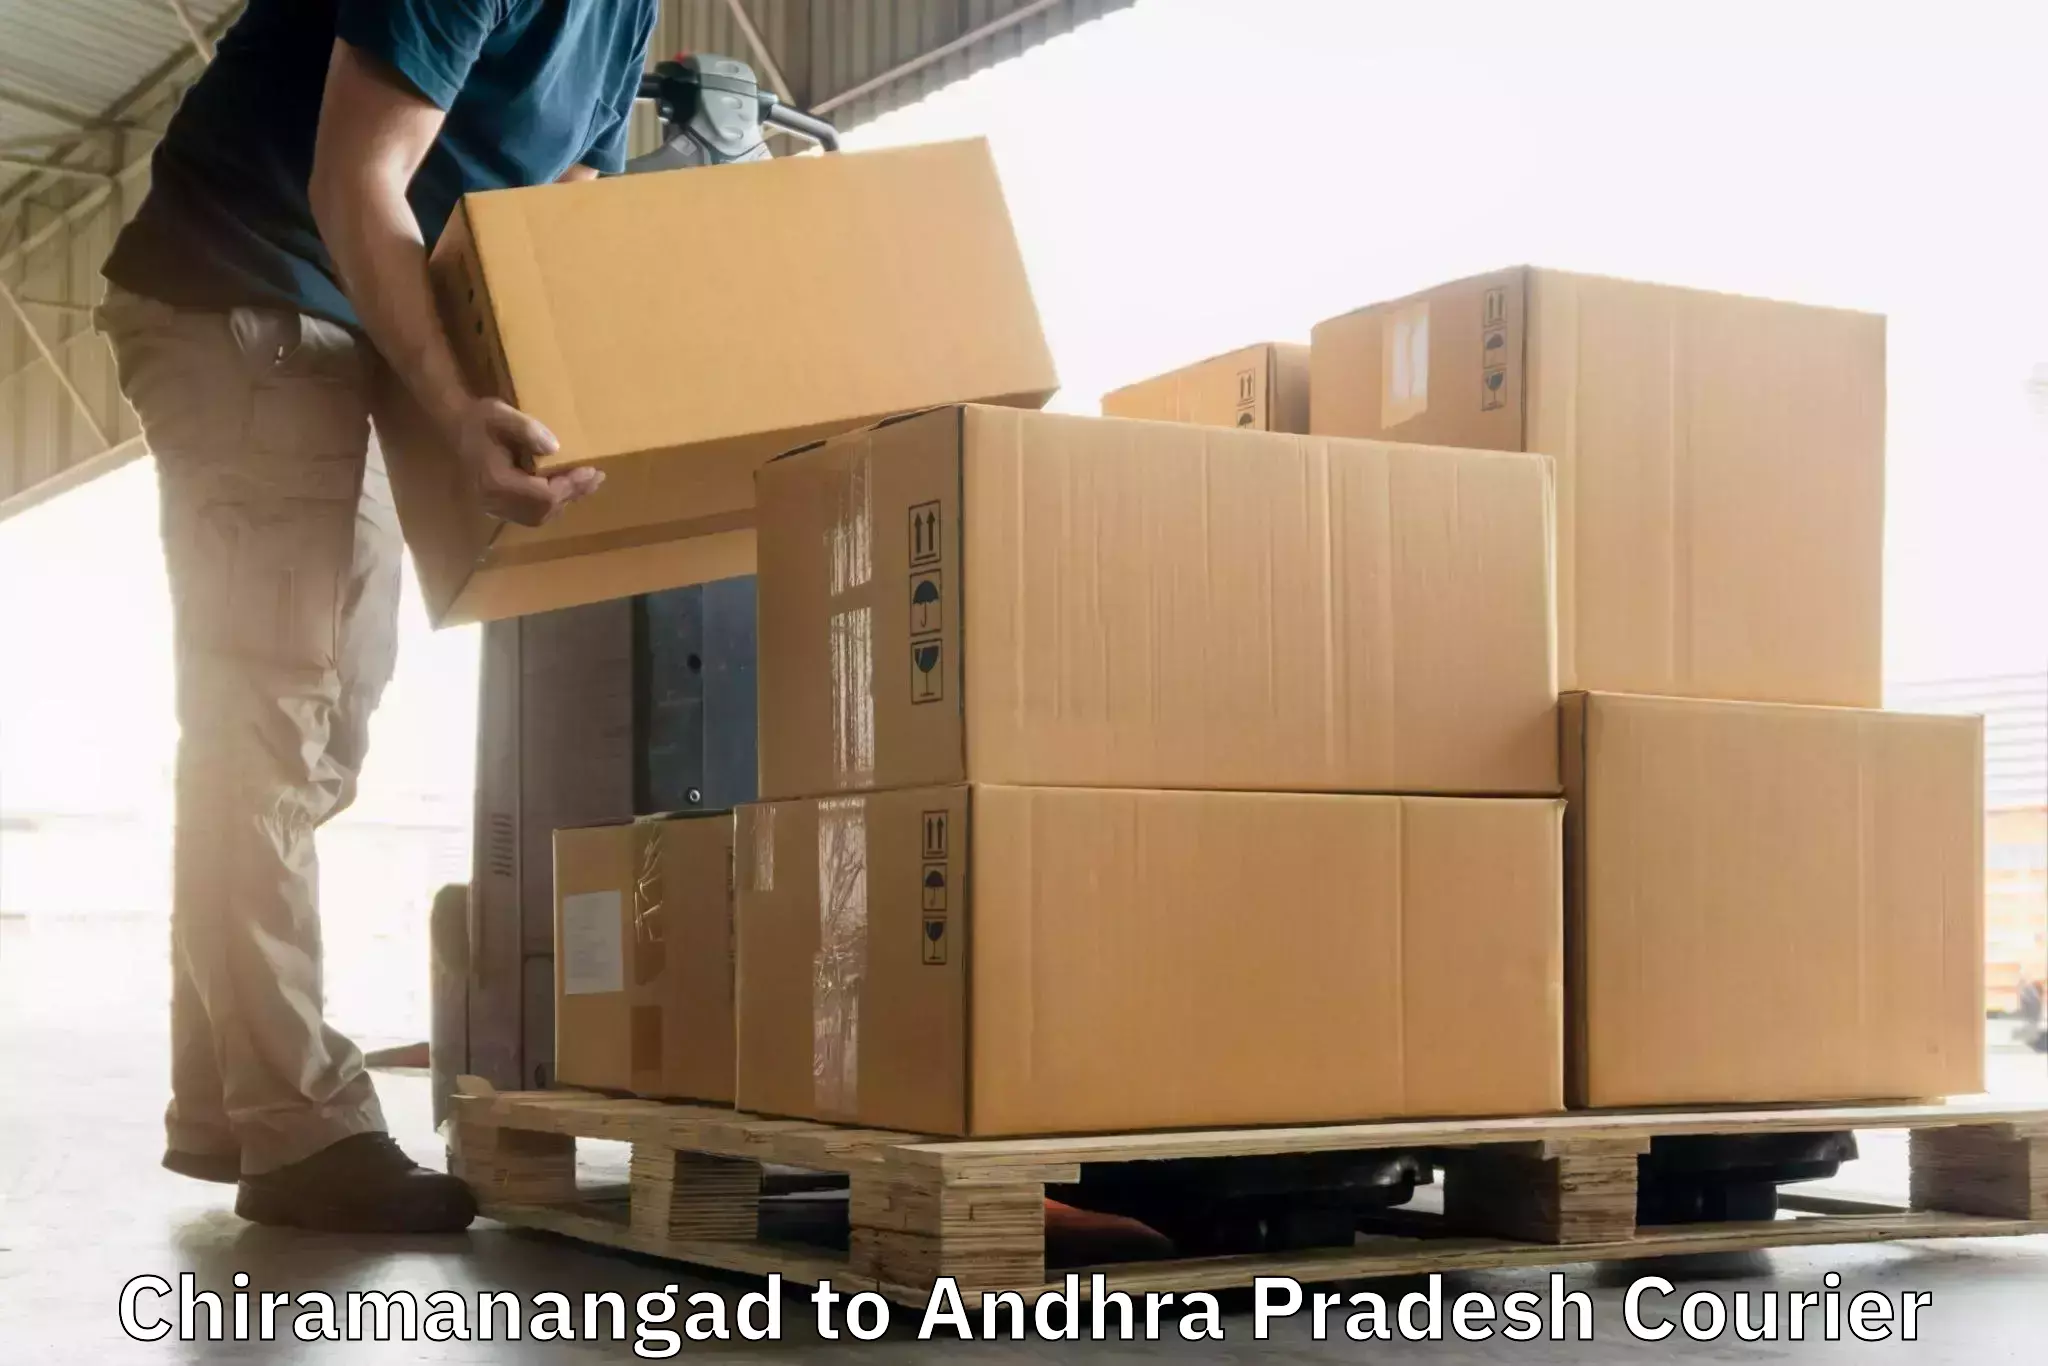 Smart courier technologies Chiramanangad to Visakhapatnam Port